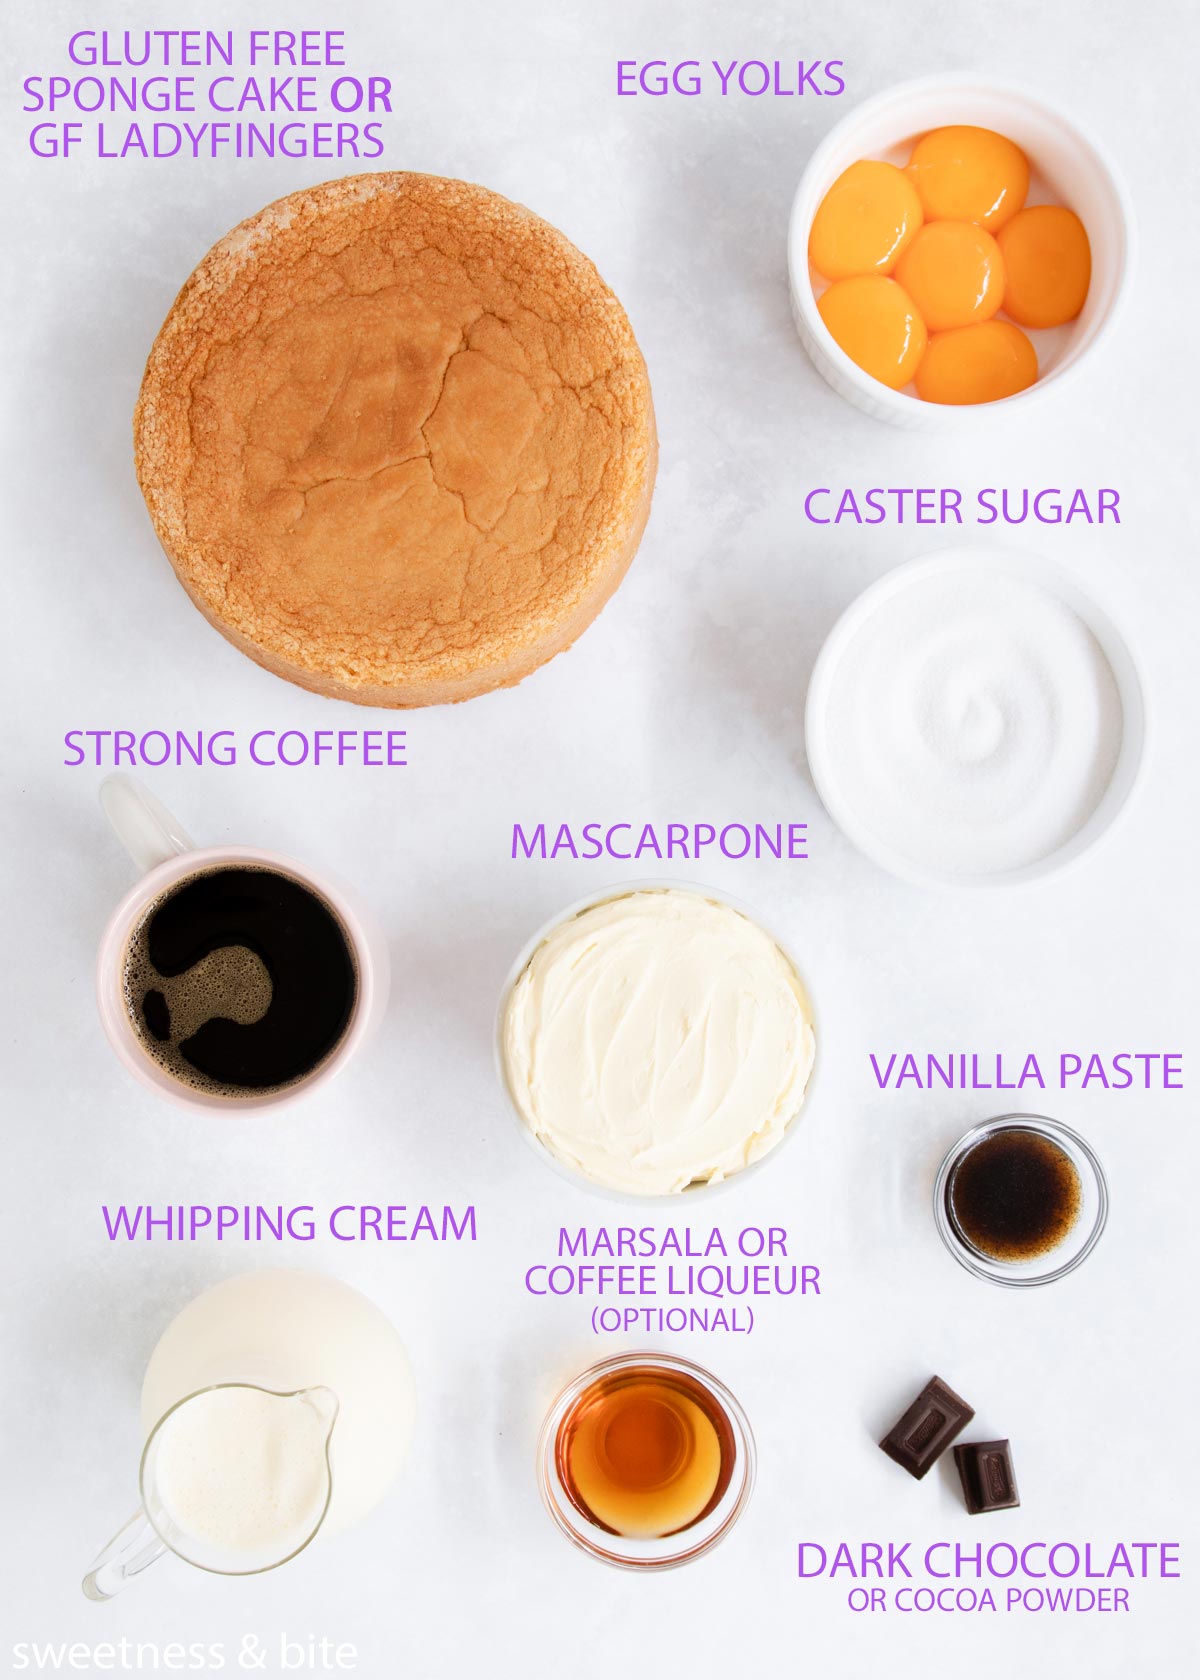 The tiramisu ingredients - sponge, egg yolks, sugar, coffee, mascarpone, vanilla, cream, marsala and dark chocolate.